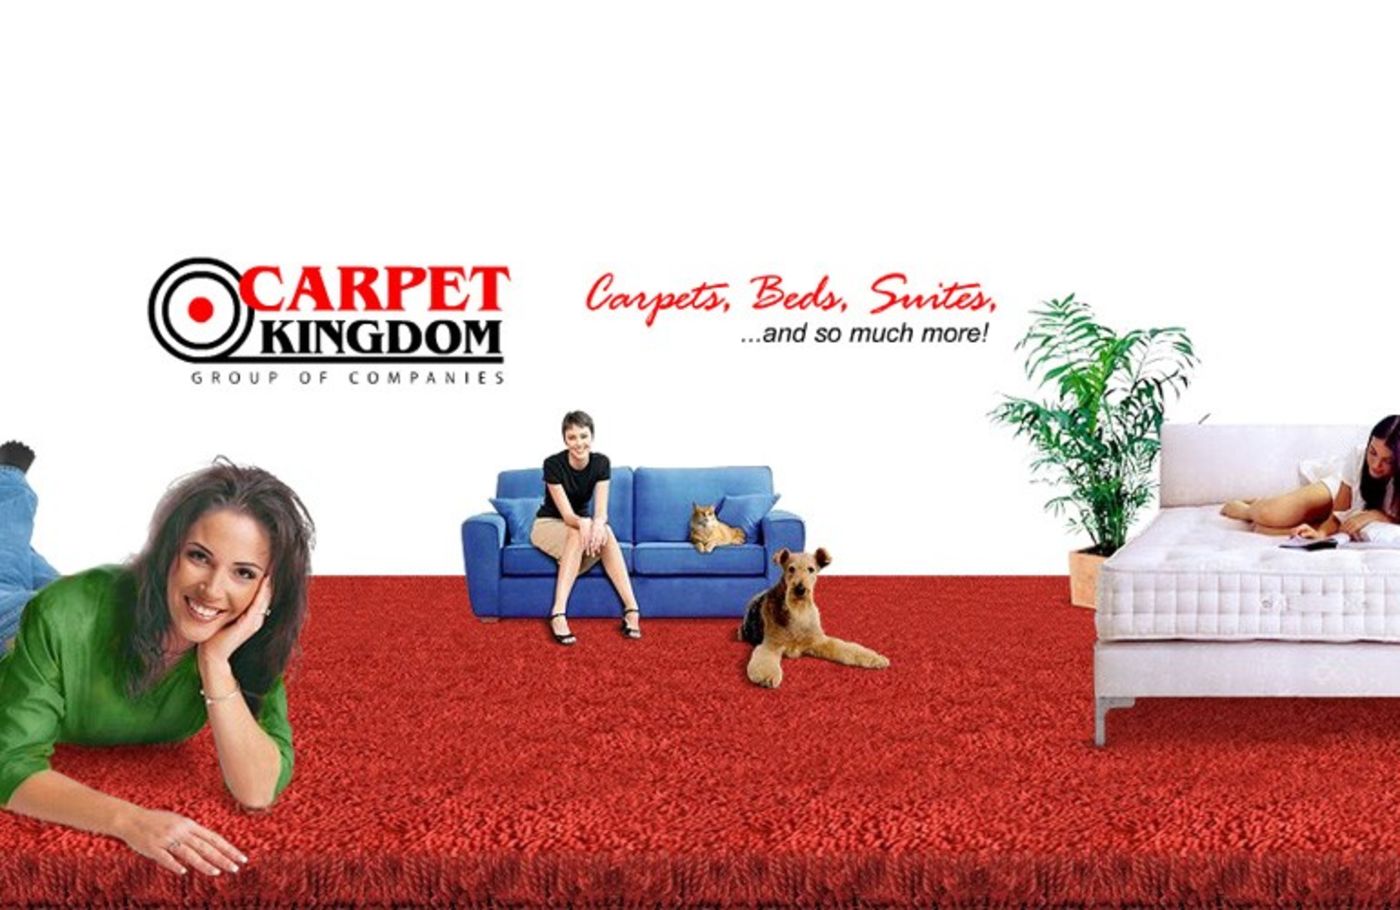 Carpet Kingdom Group Welcome